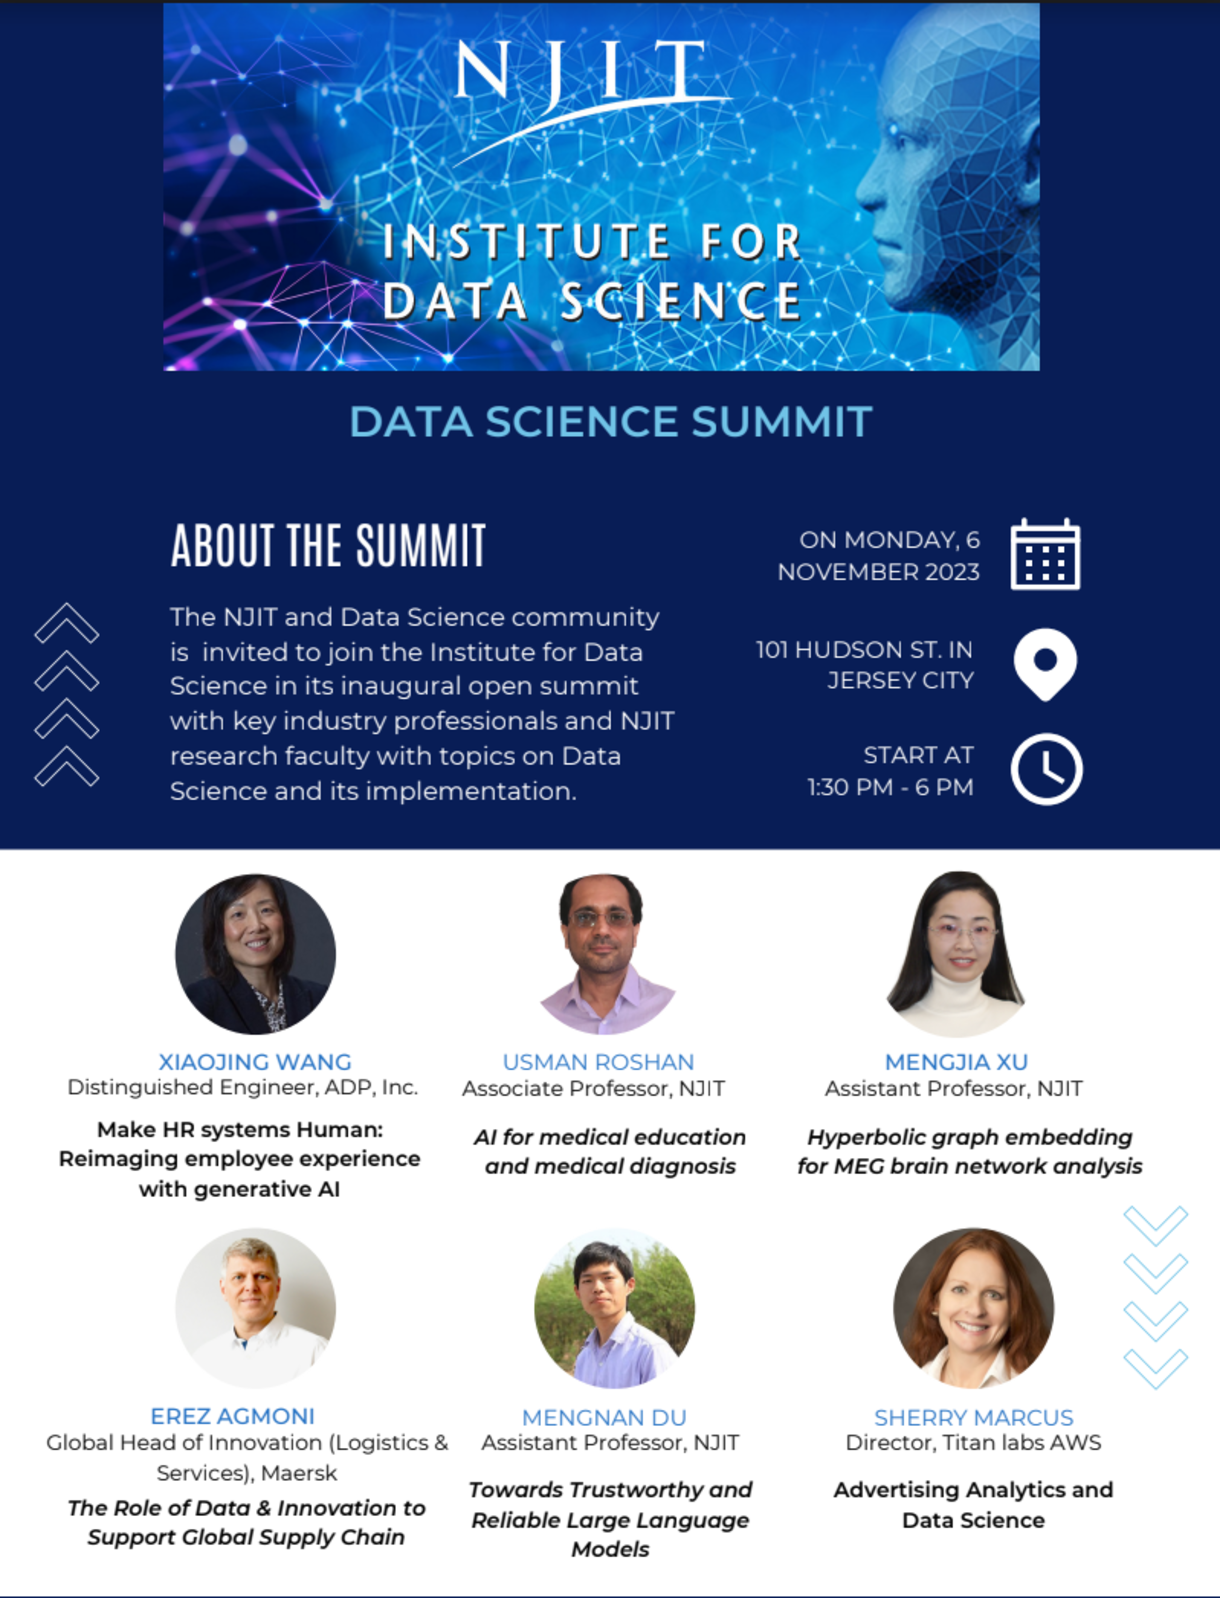 NJIT Data Science Summit, November 6